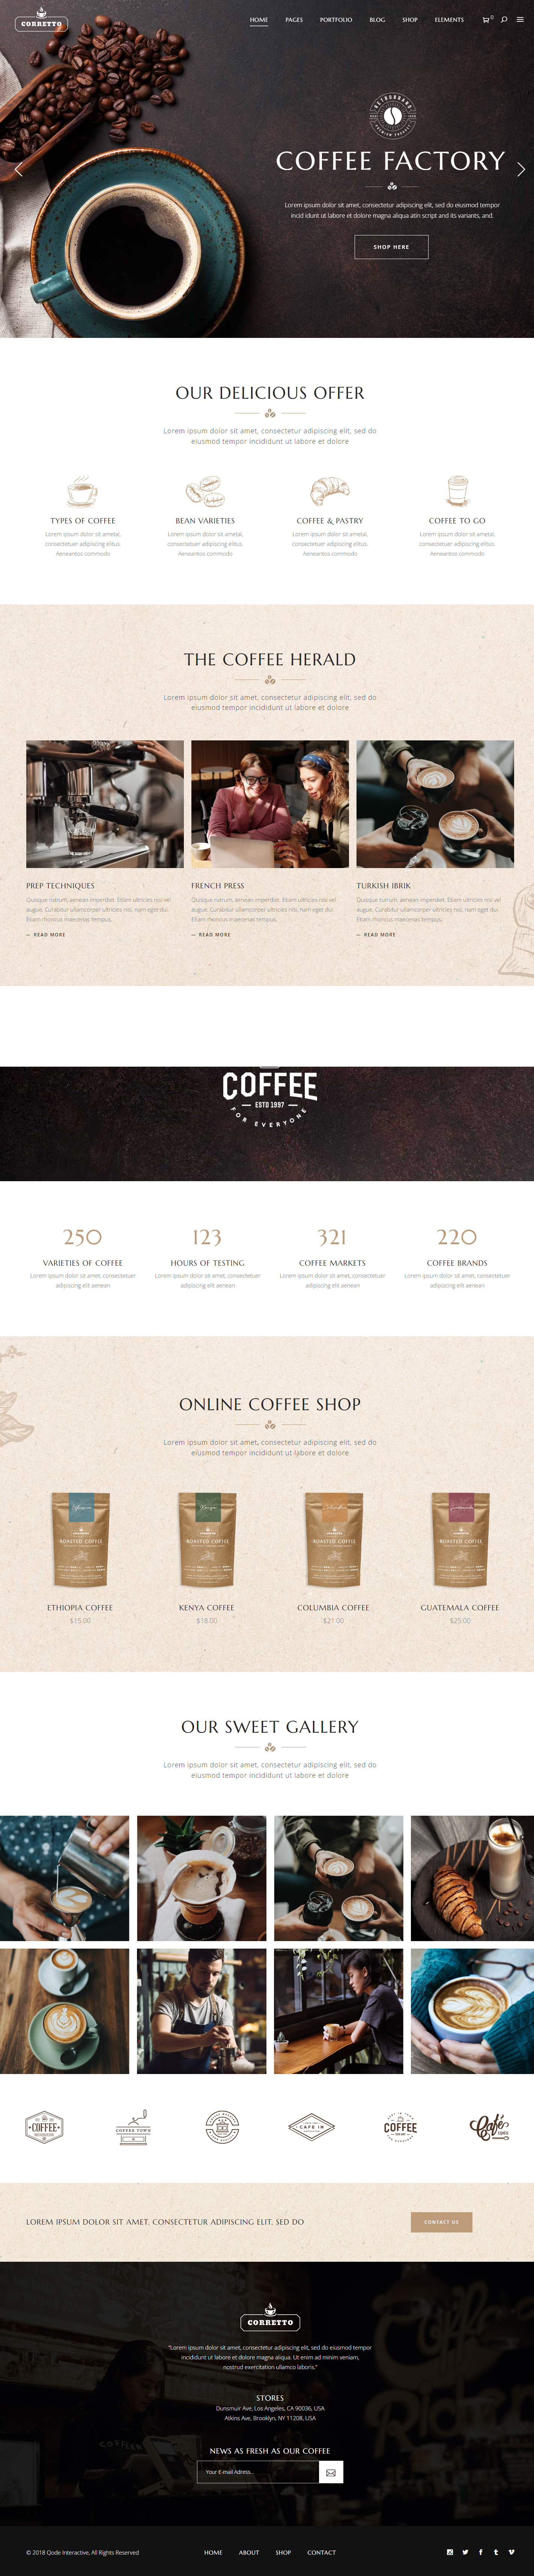 Mẫu giao diện website Cà phê Corretto